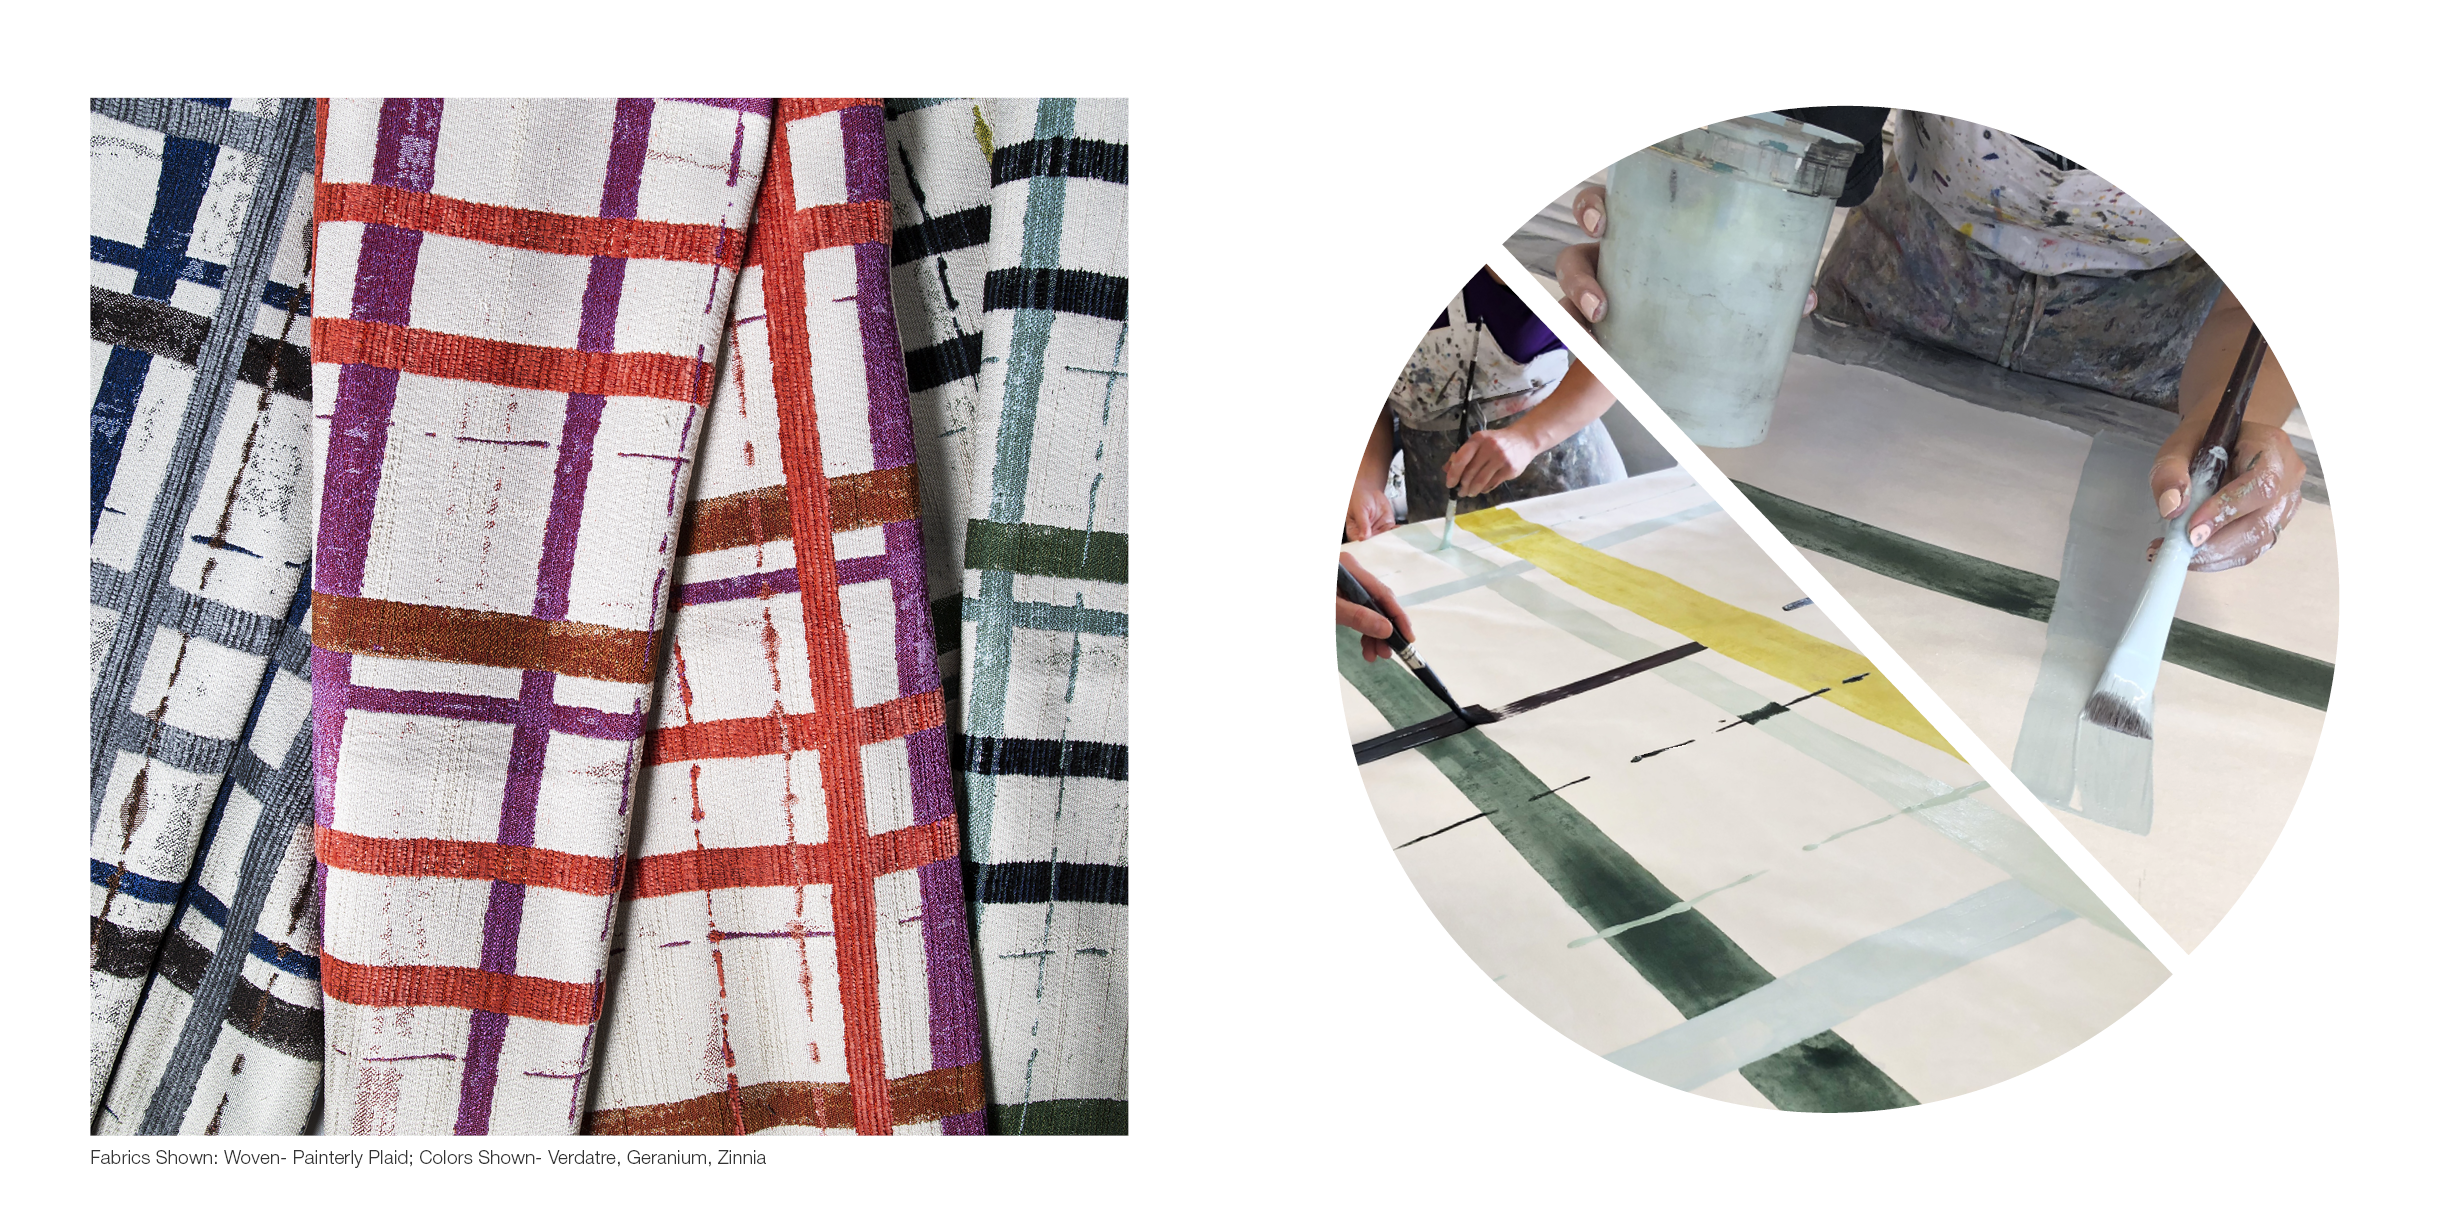 Fabrics Shown: Woven - Painterly Plaid. Colors Shown: Verdatre, Geranium, Zinnia.